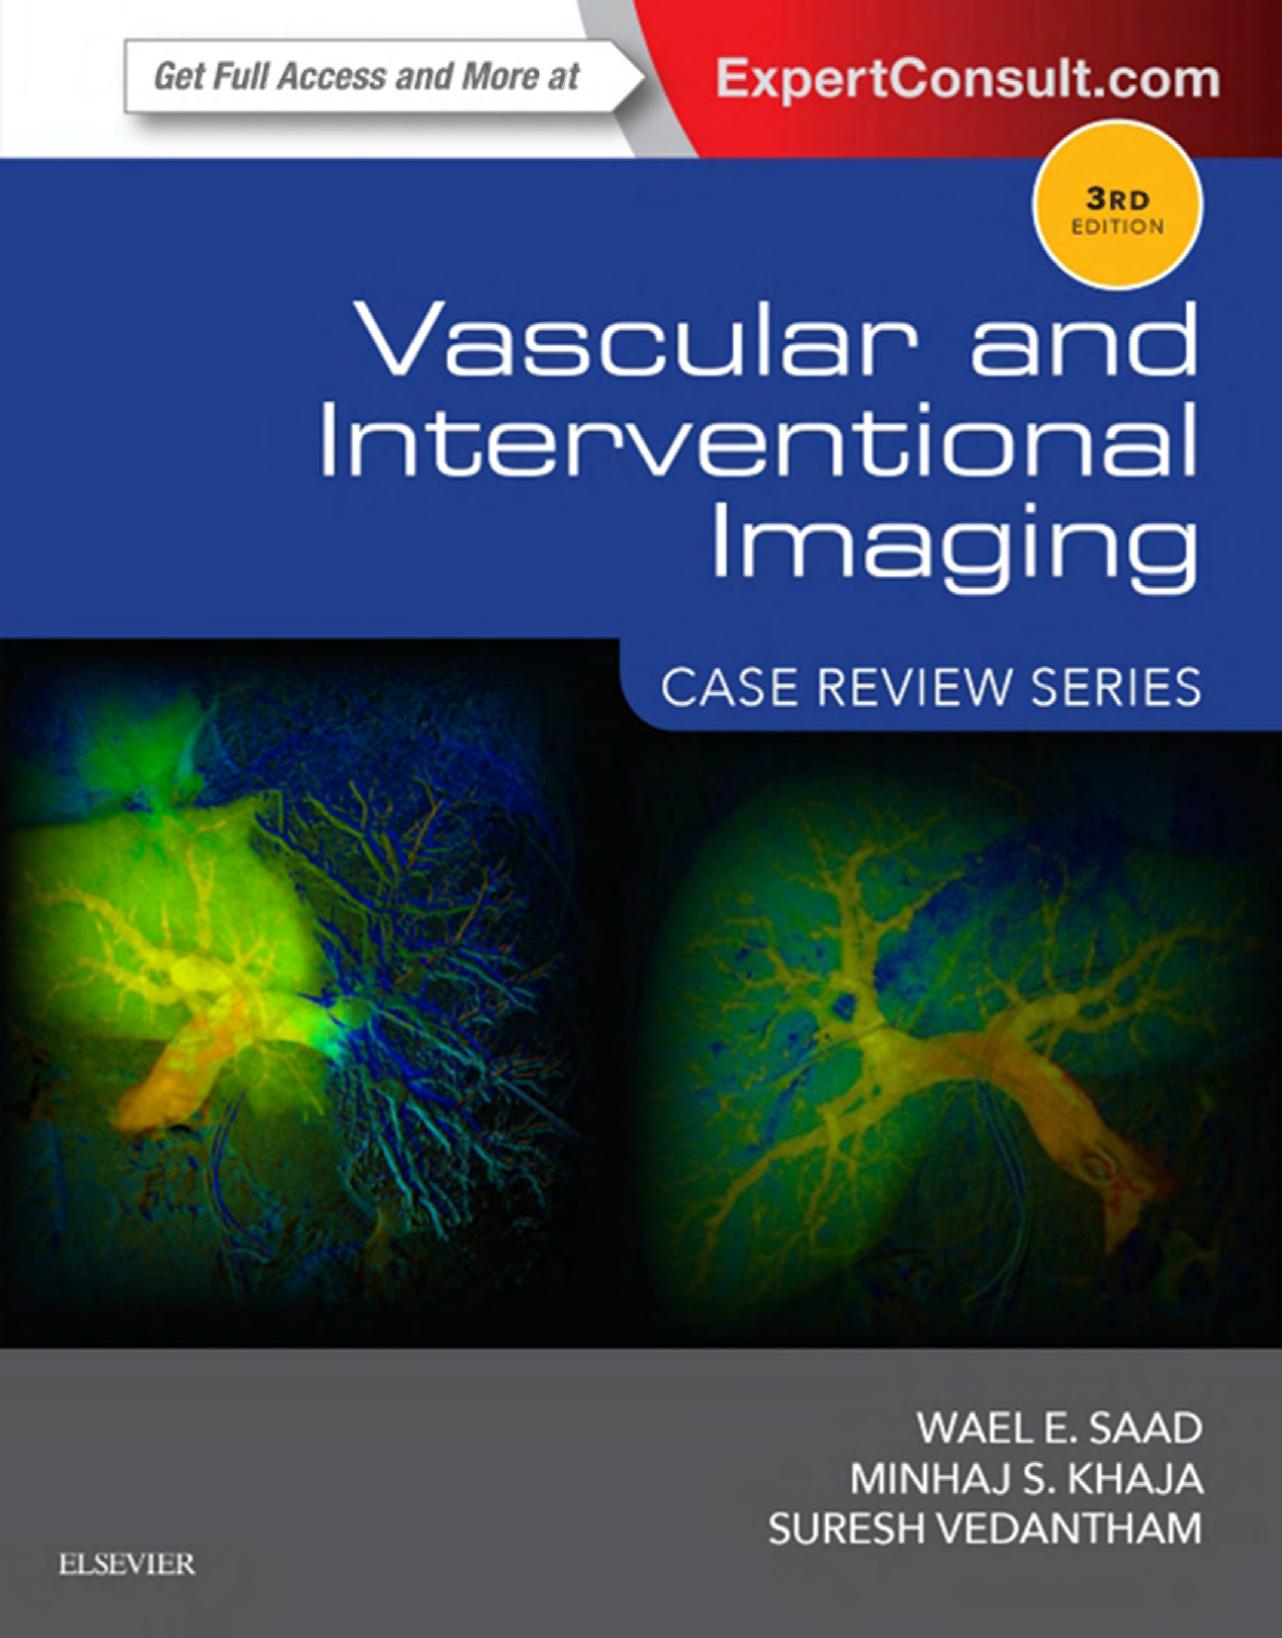 Vascular and Interventional Imaging Case Review Series 3rd - Wael E. Saad & Minhaj S. Khaja & Suresh Vedantham.jpg